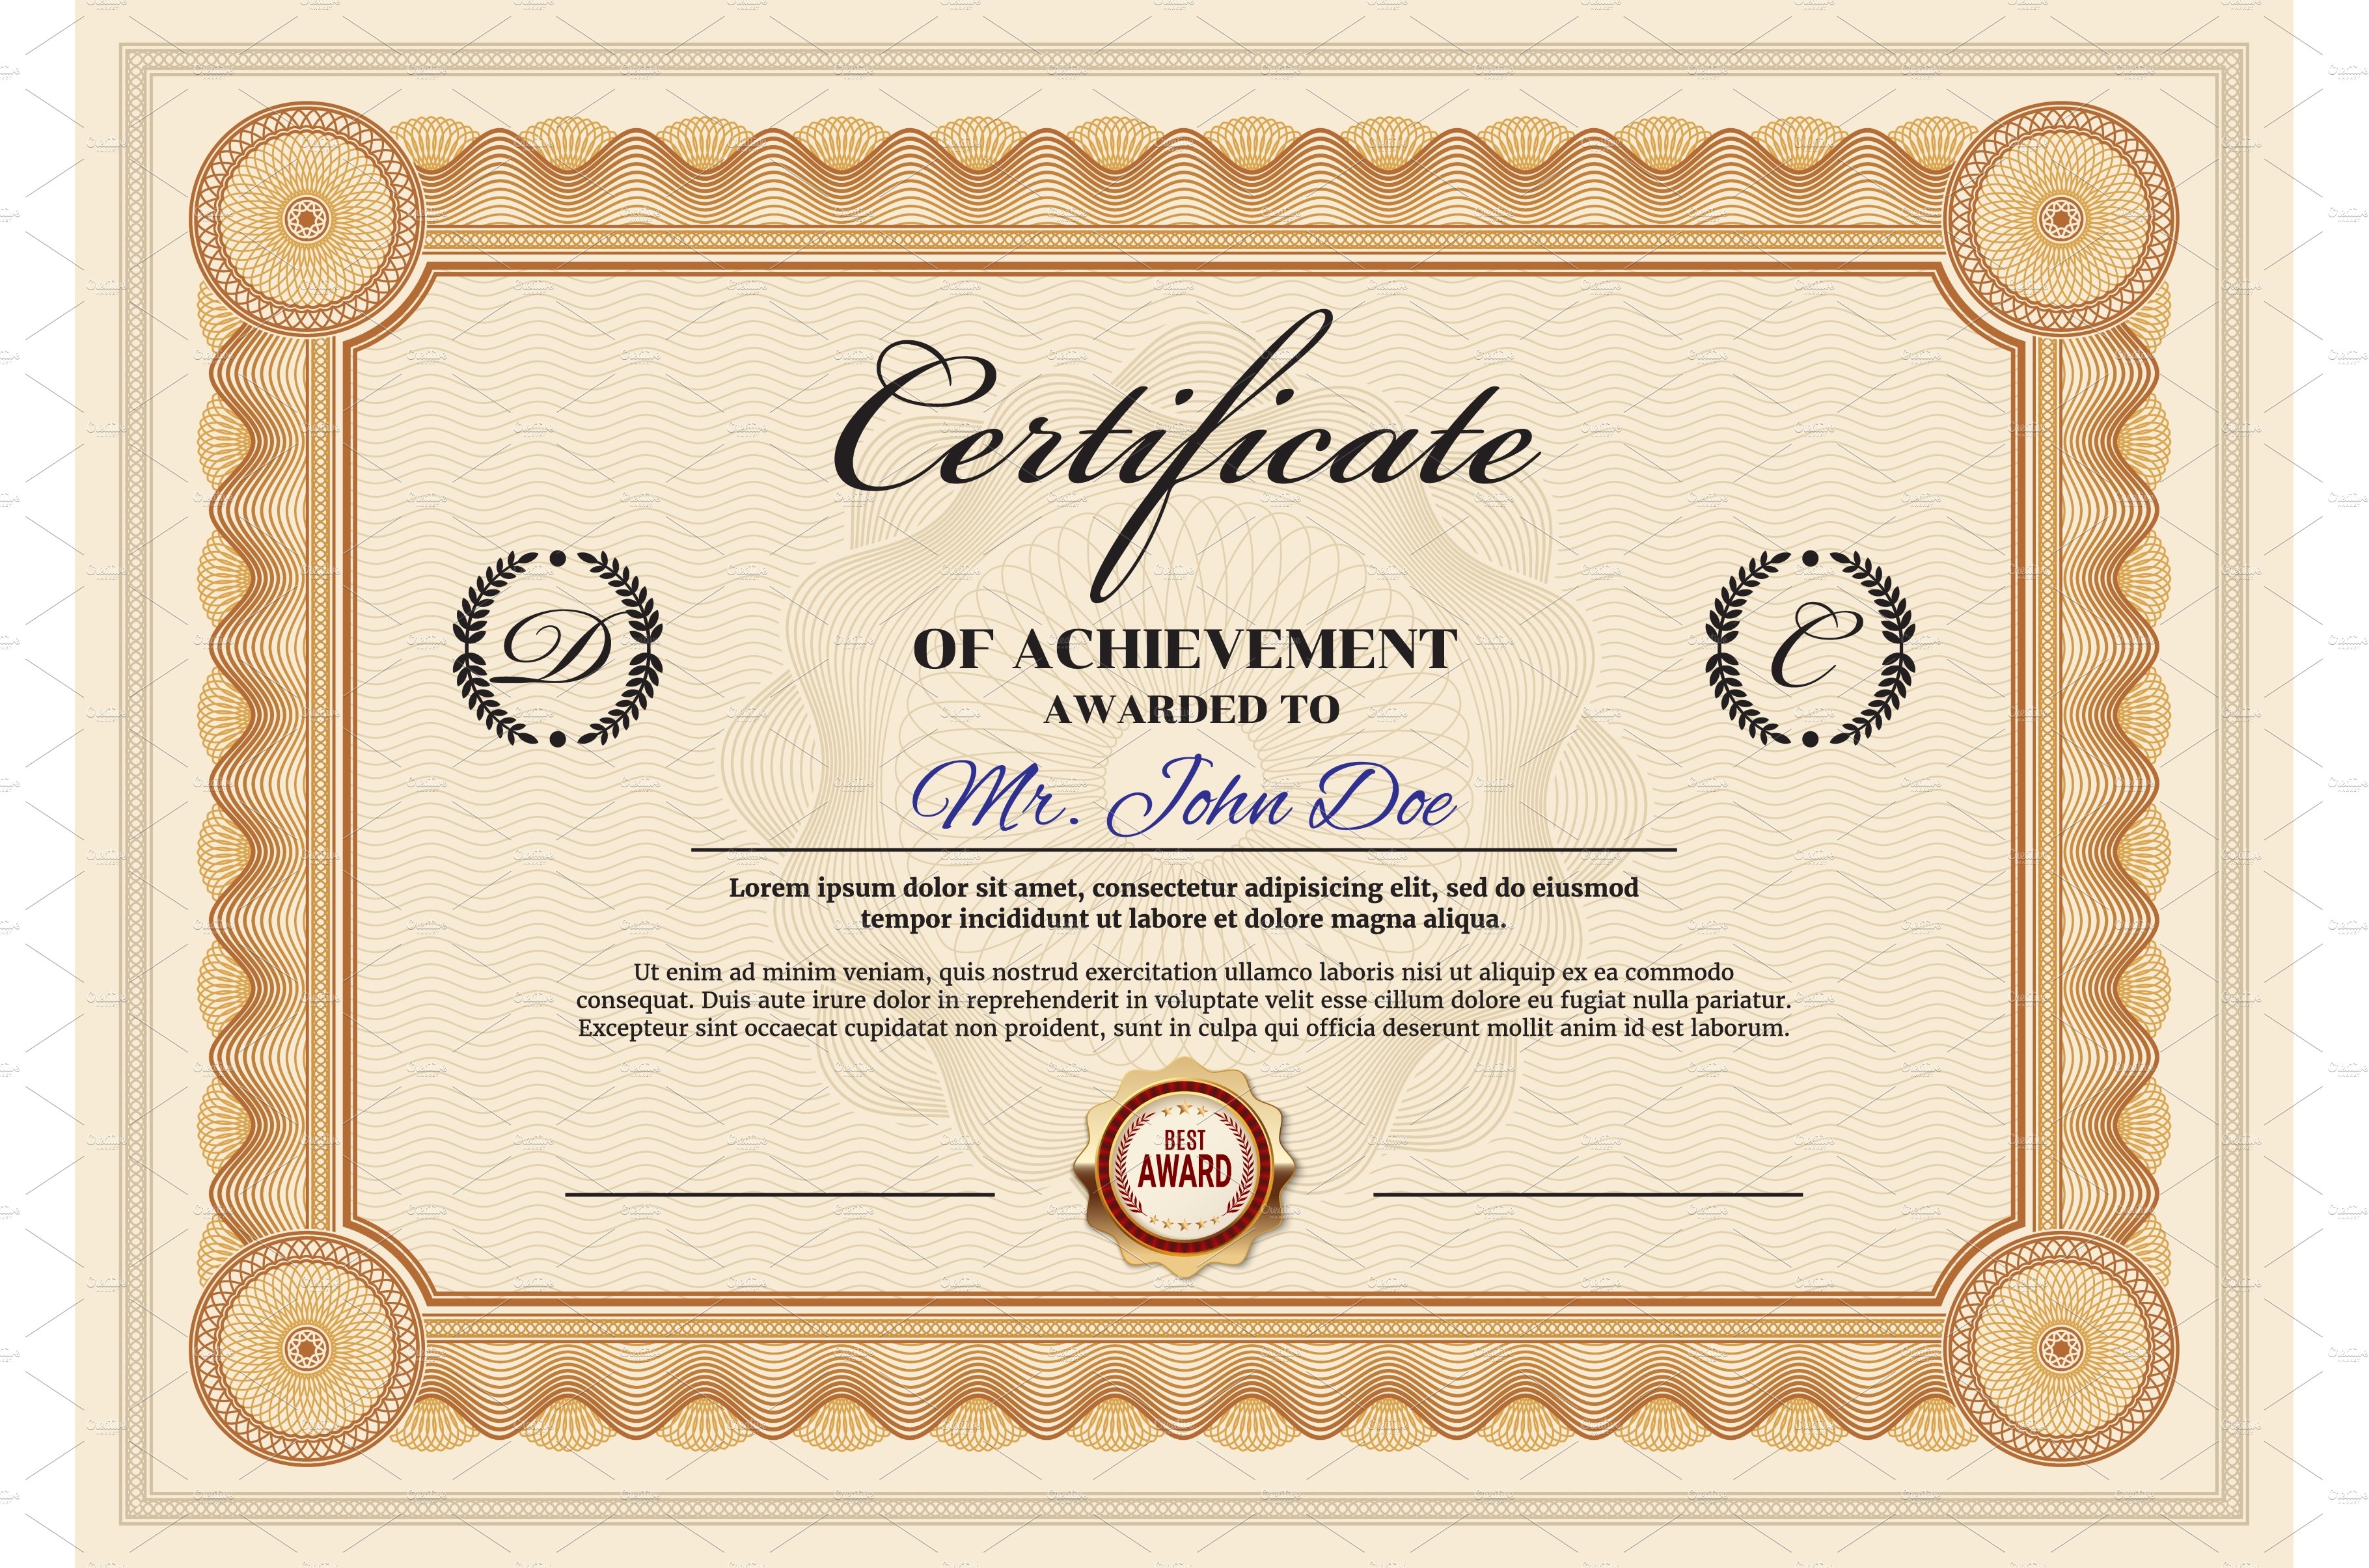 Achievement certificate, vector cover image.